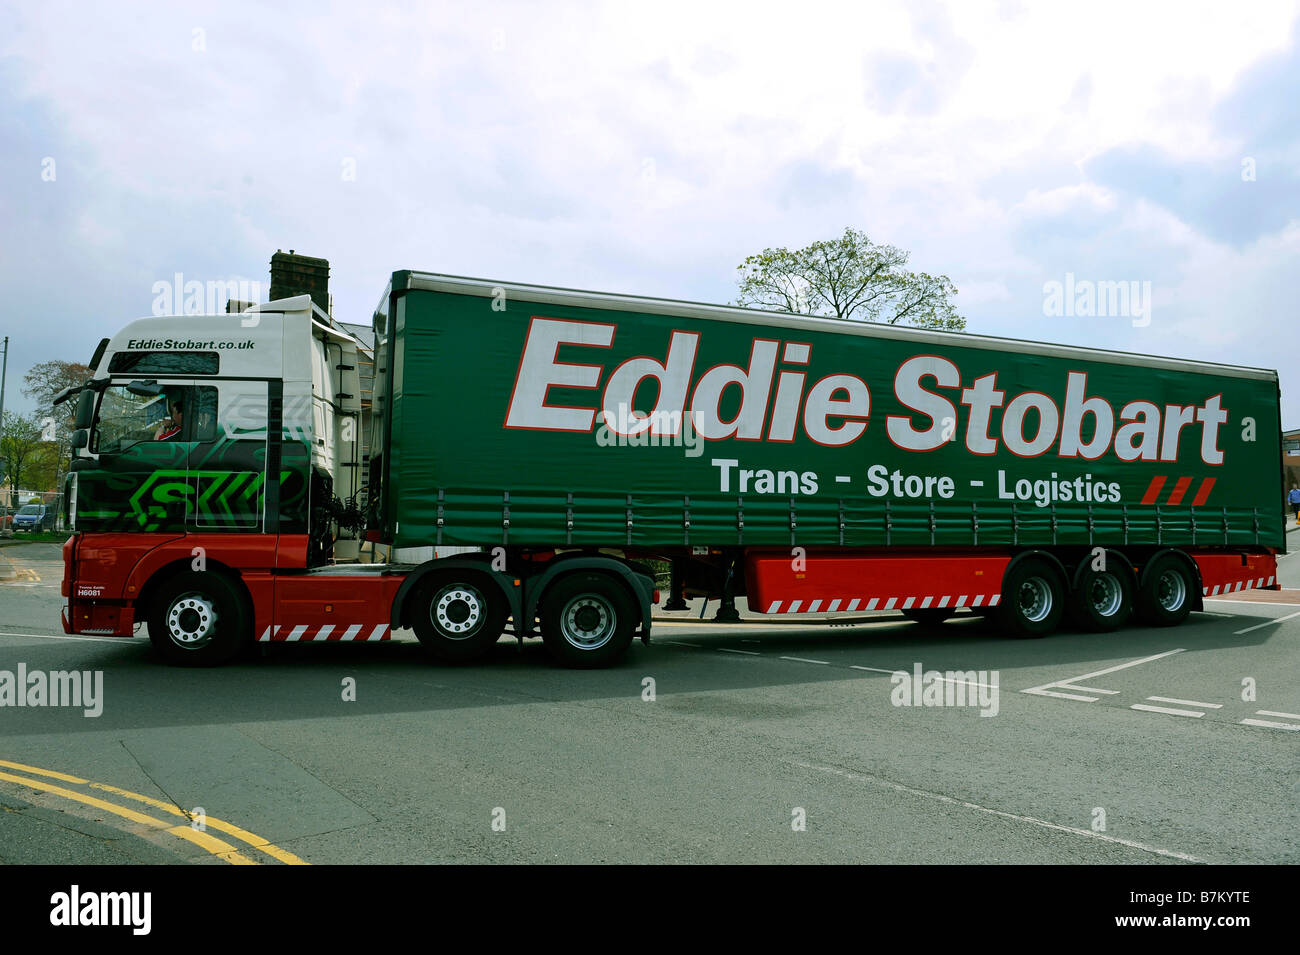 Eddie Stobart truck MAN TGA Stock Photo